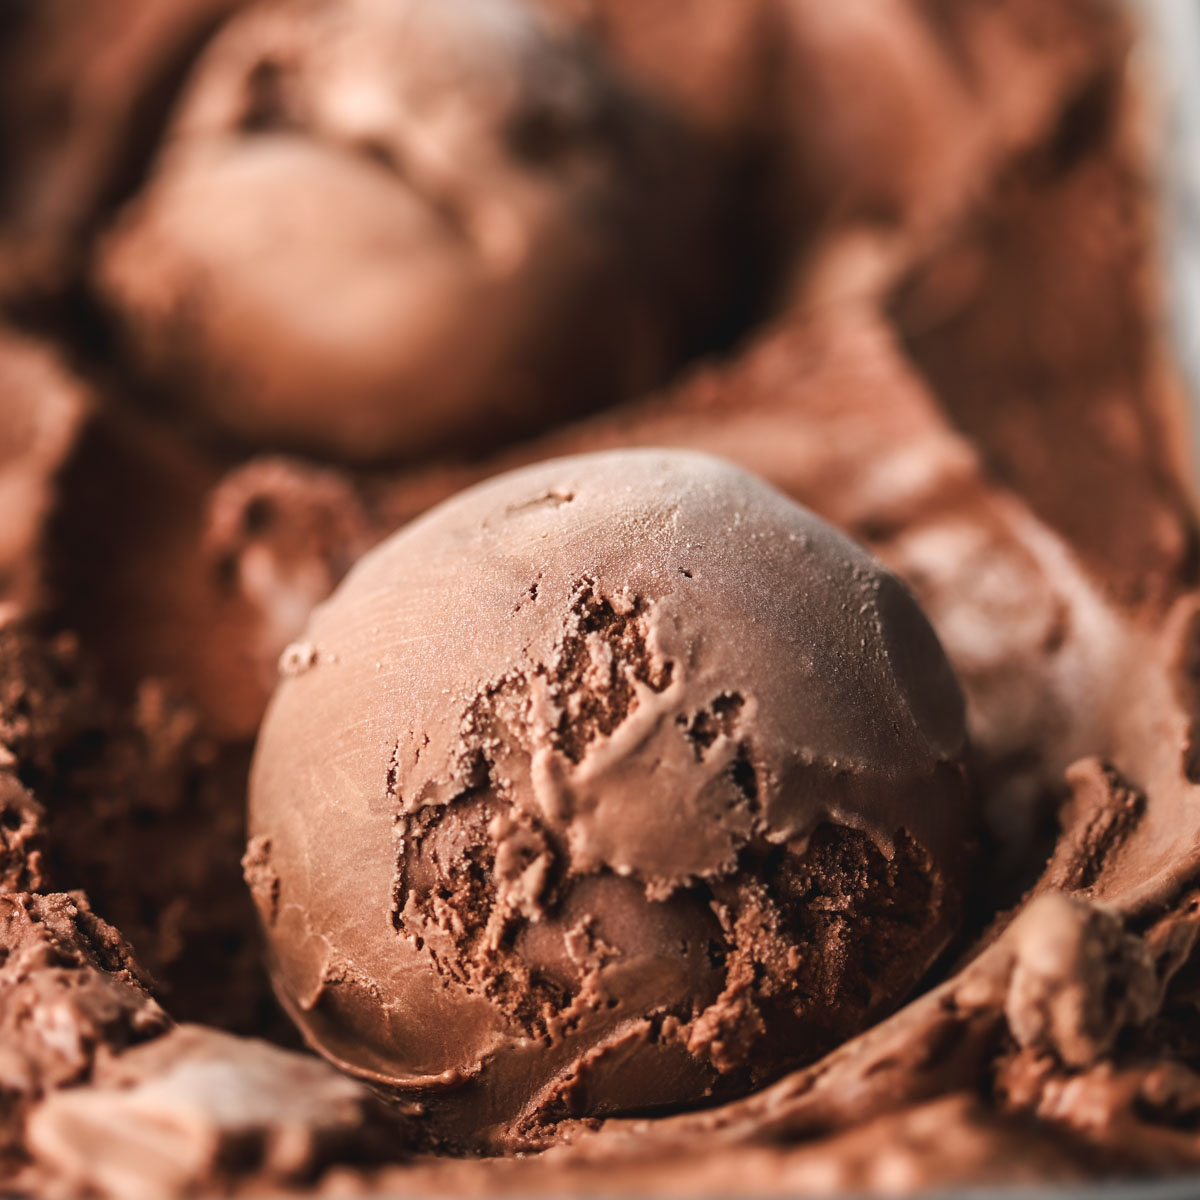 A scoop of chocolate ice cream laid on chocolate ice cream.